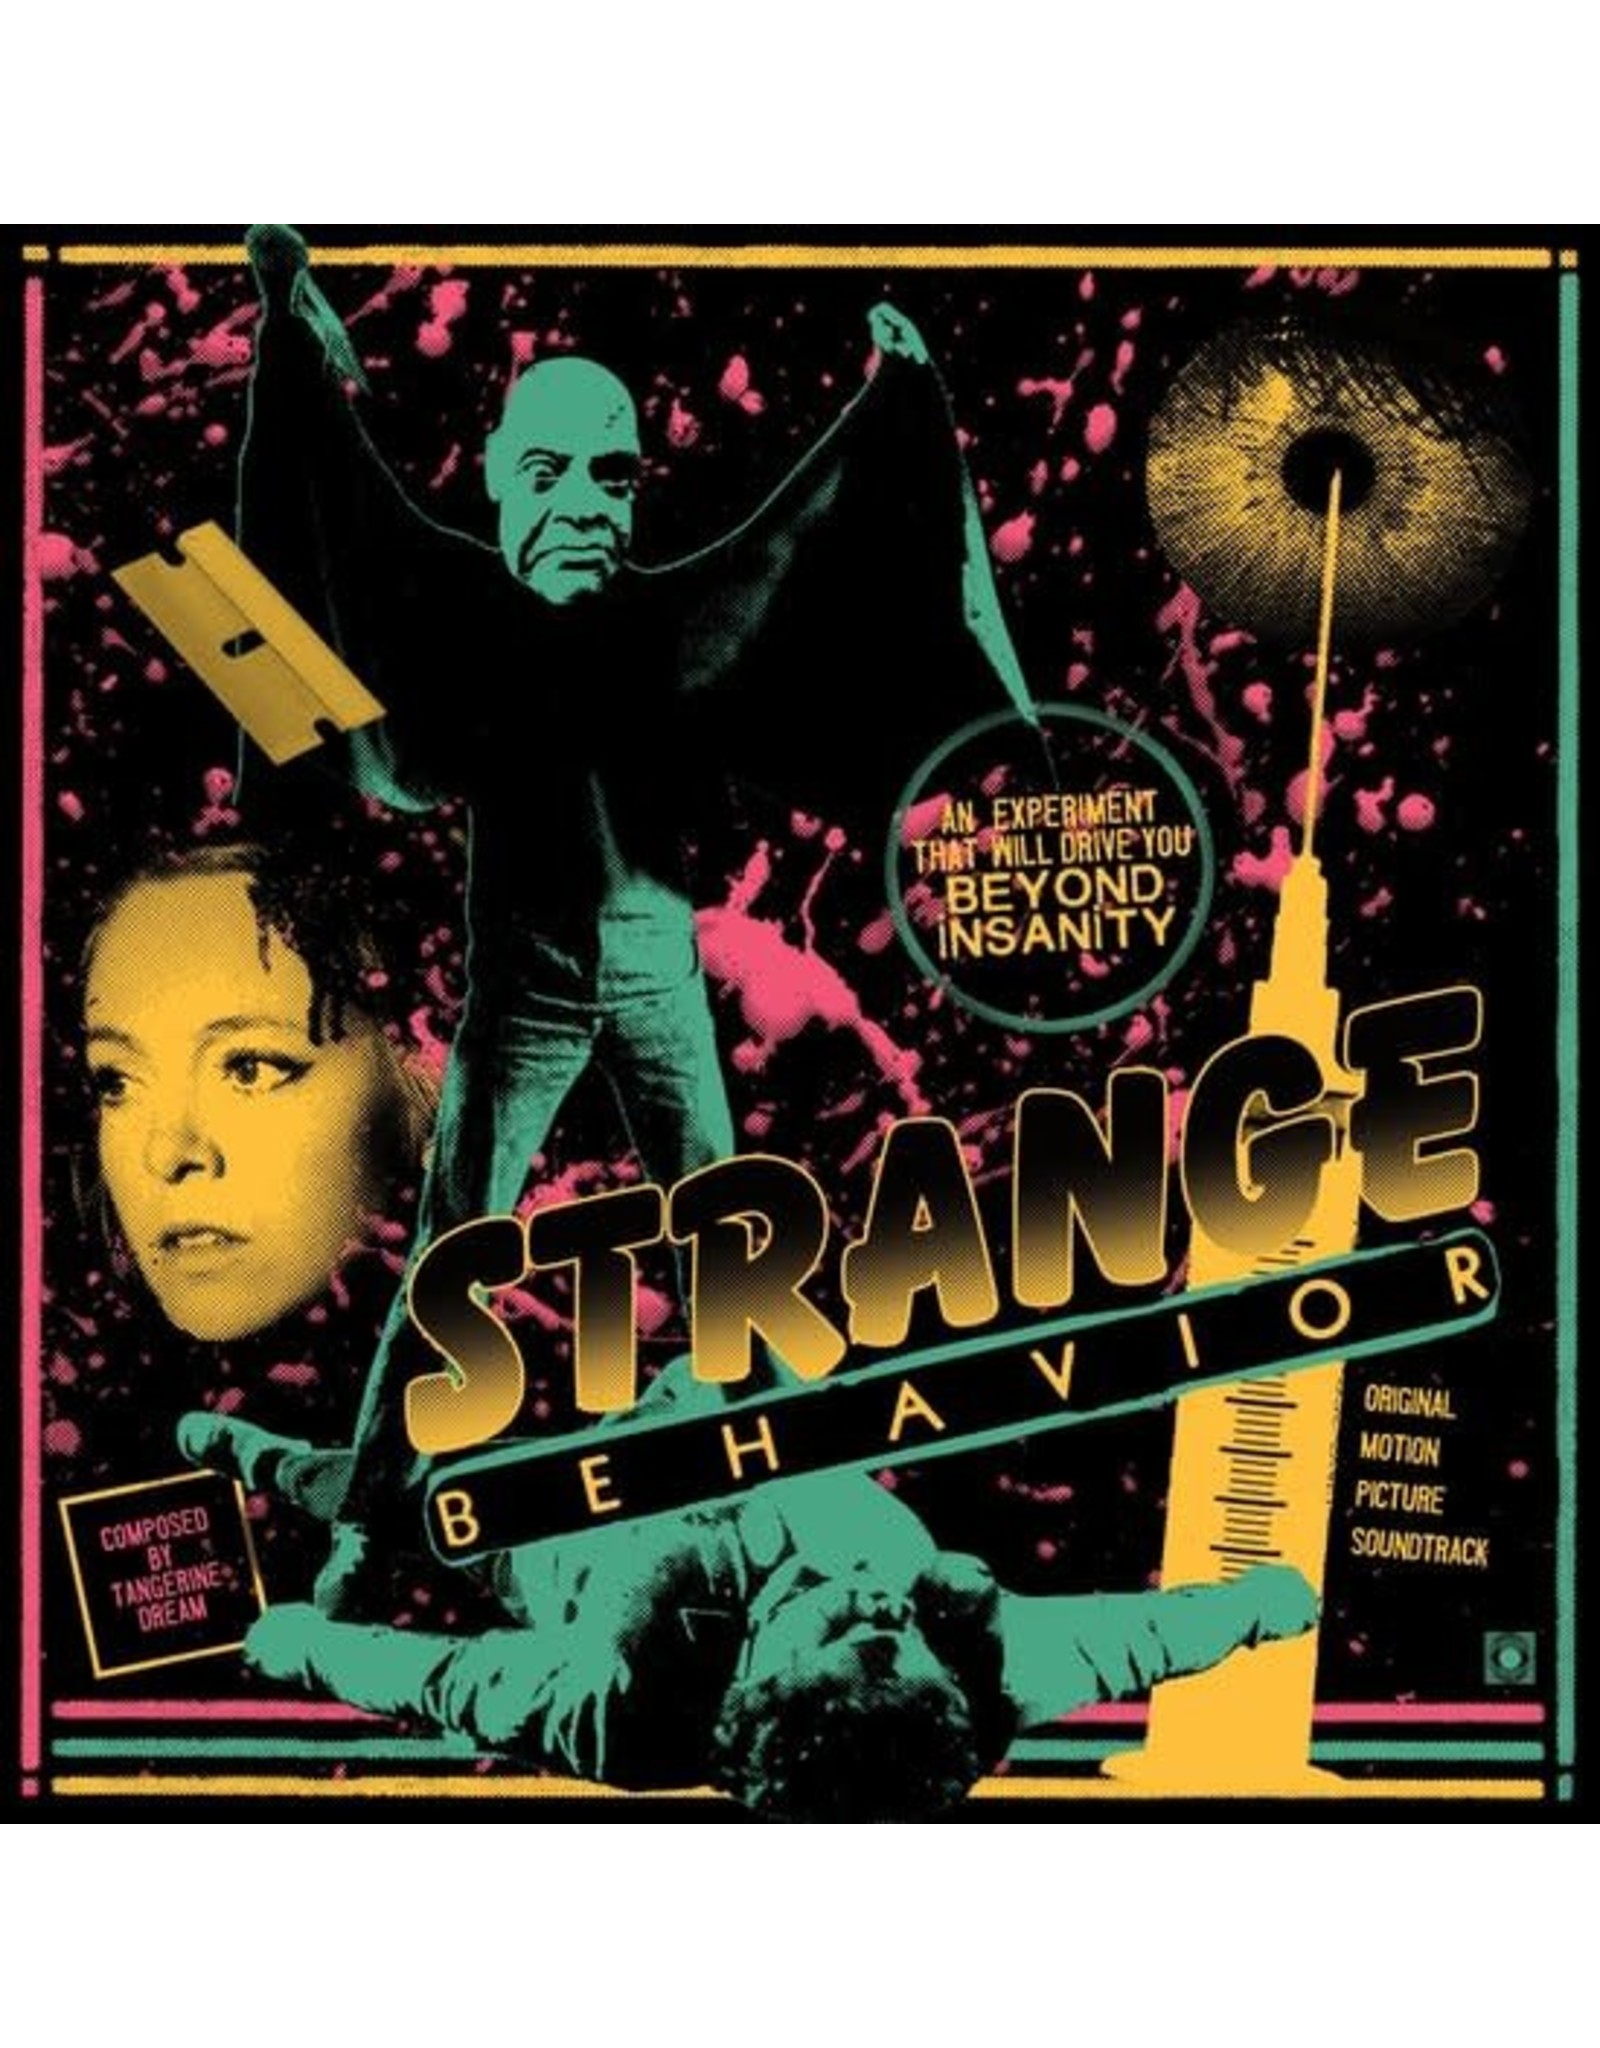 Terror Vision Tangerine Dream: Strange Behavior OST (Neon Twist) LP